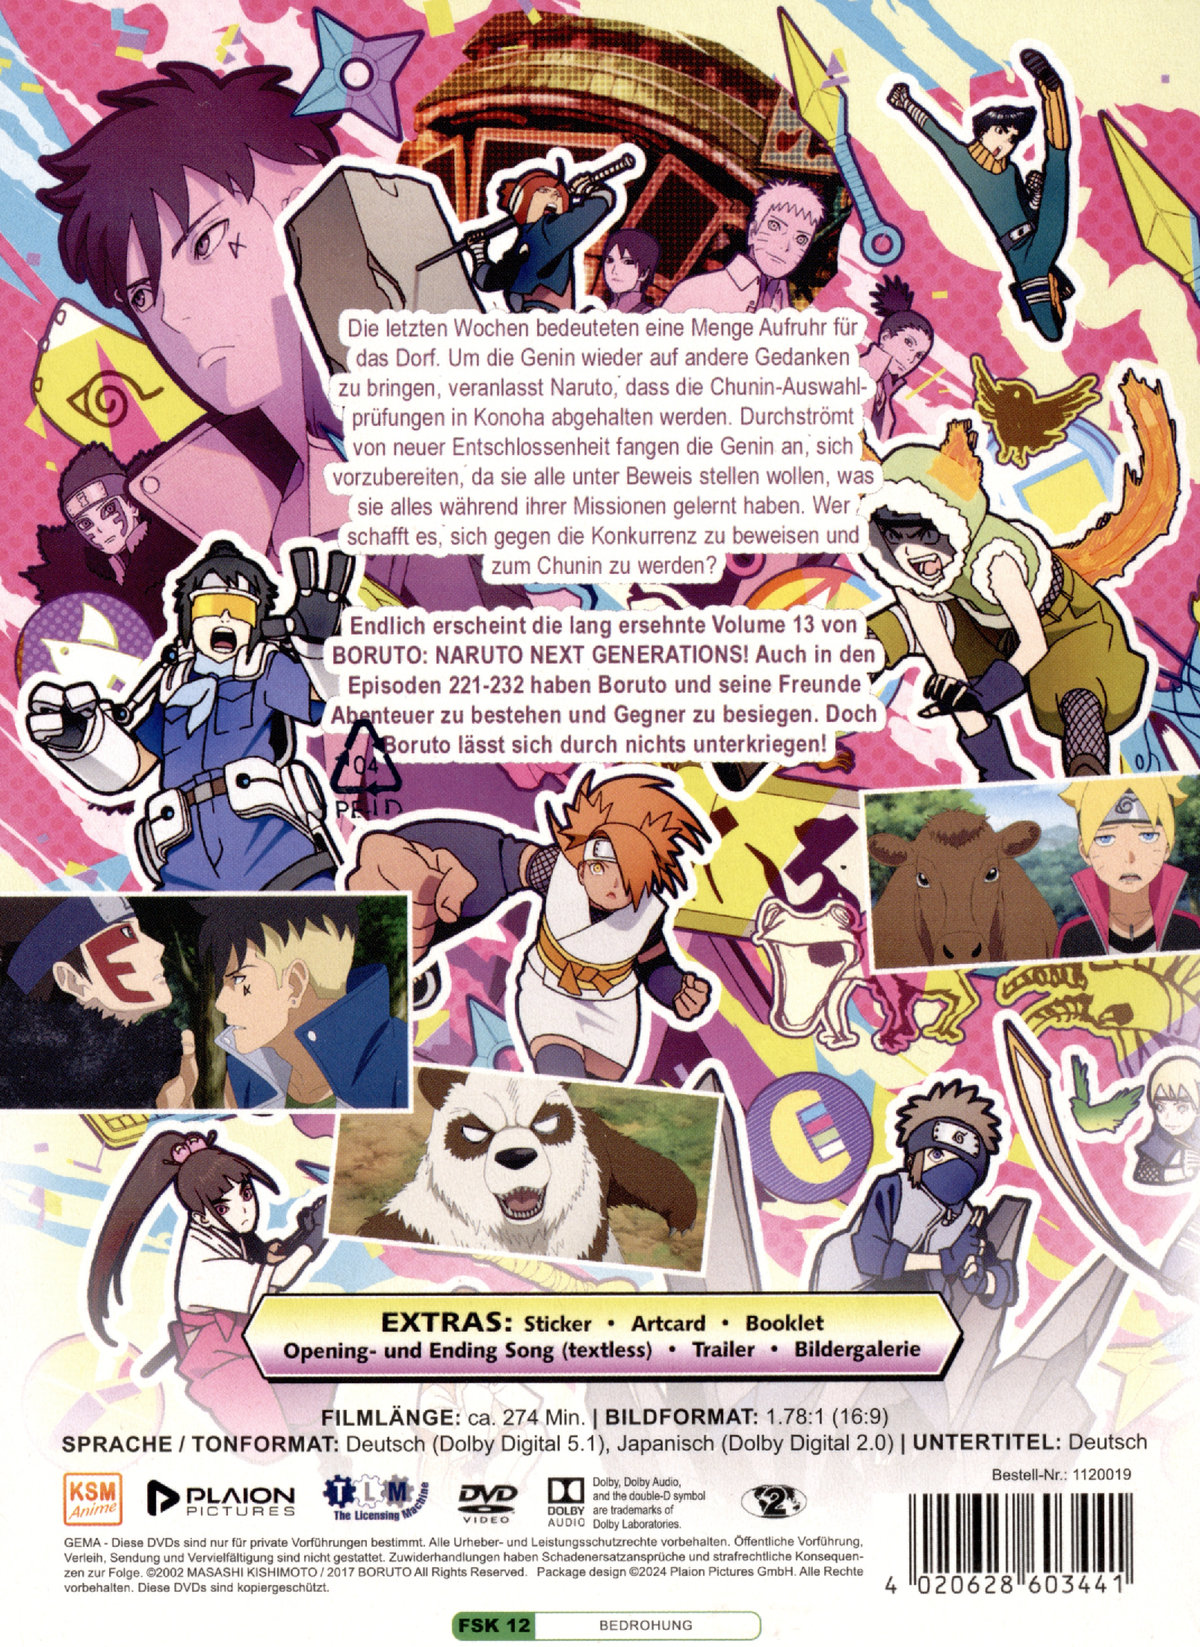 Boruto: Naruto Next Generations - Volume 13 (Ep. 221-232)  [3 DVDs]  (DVD)